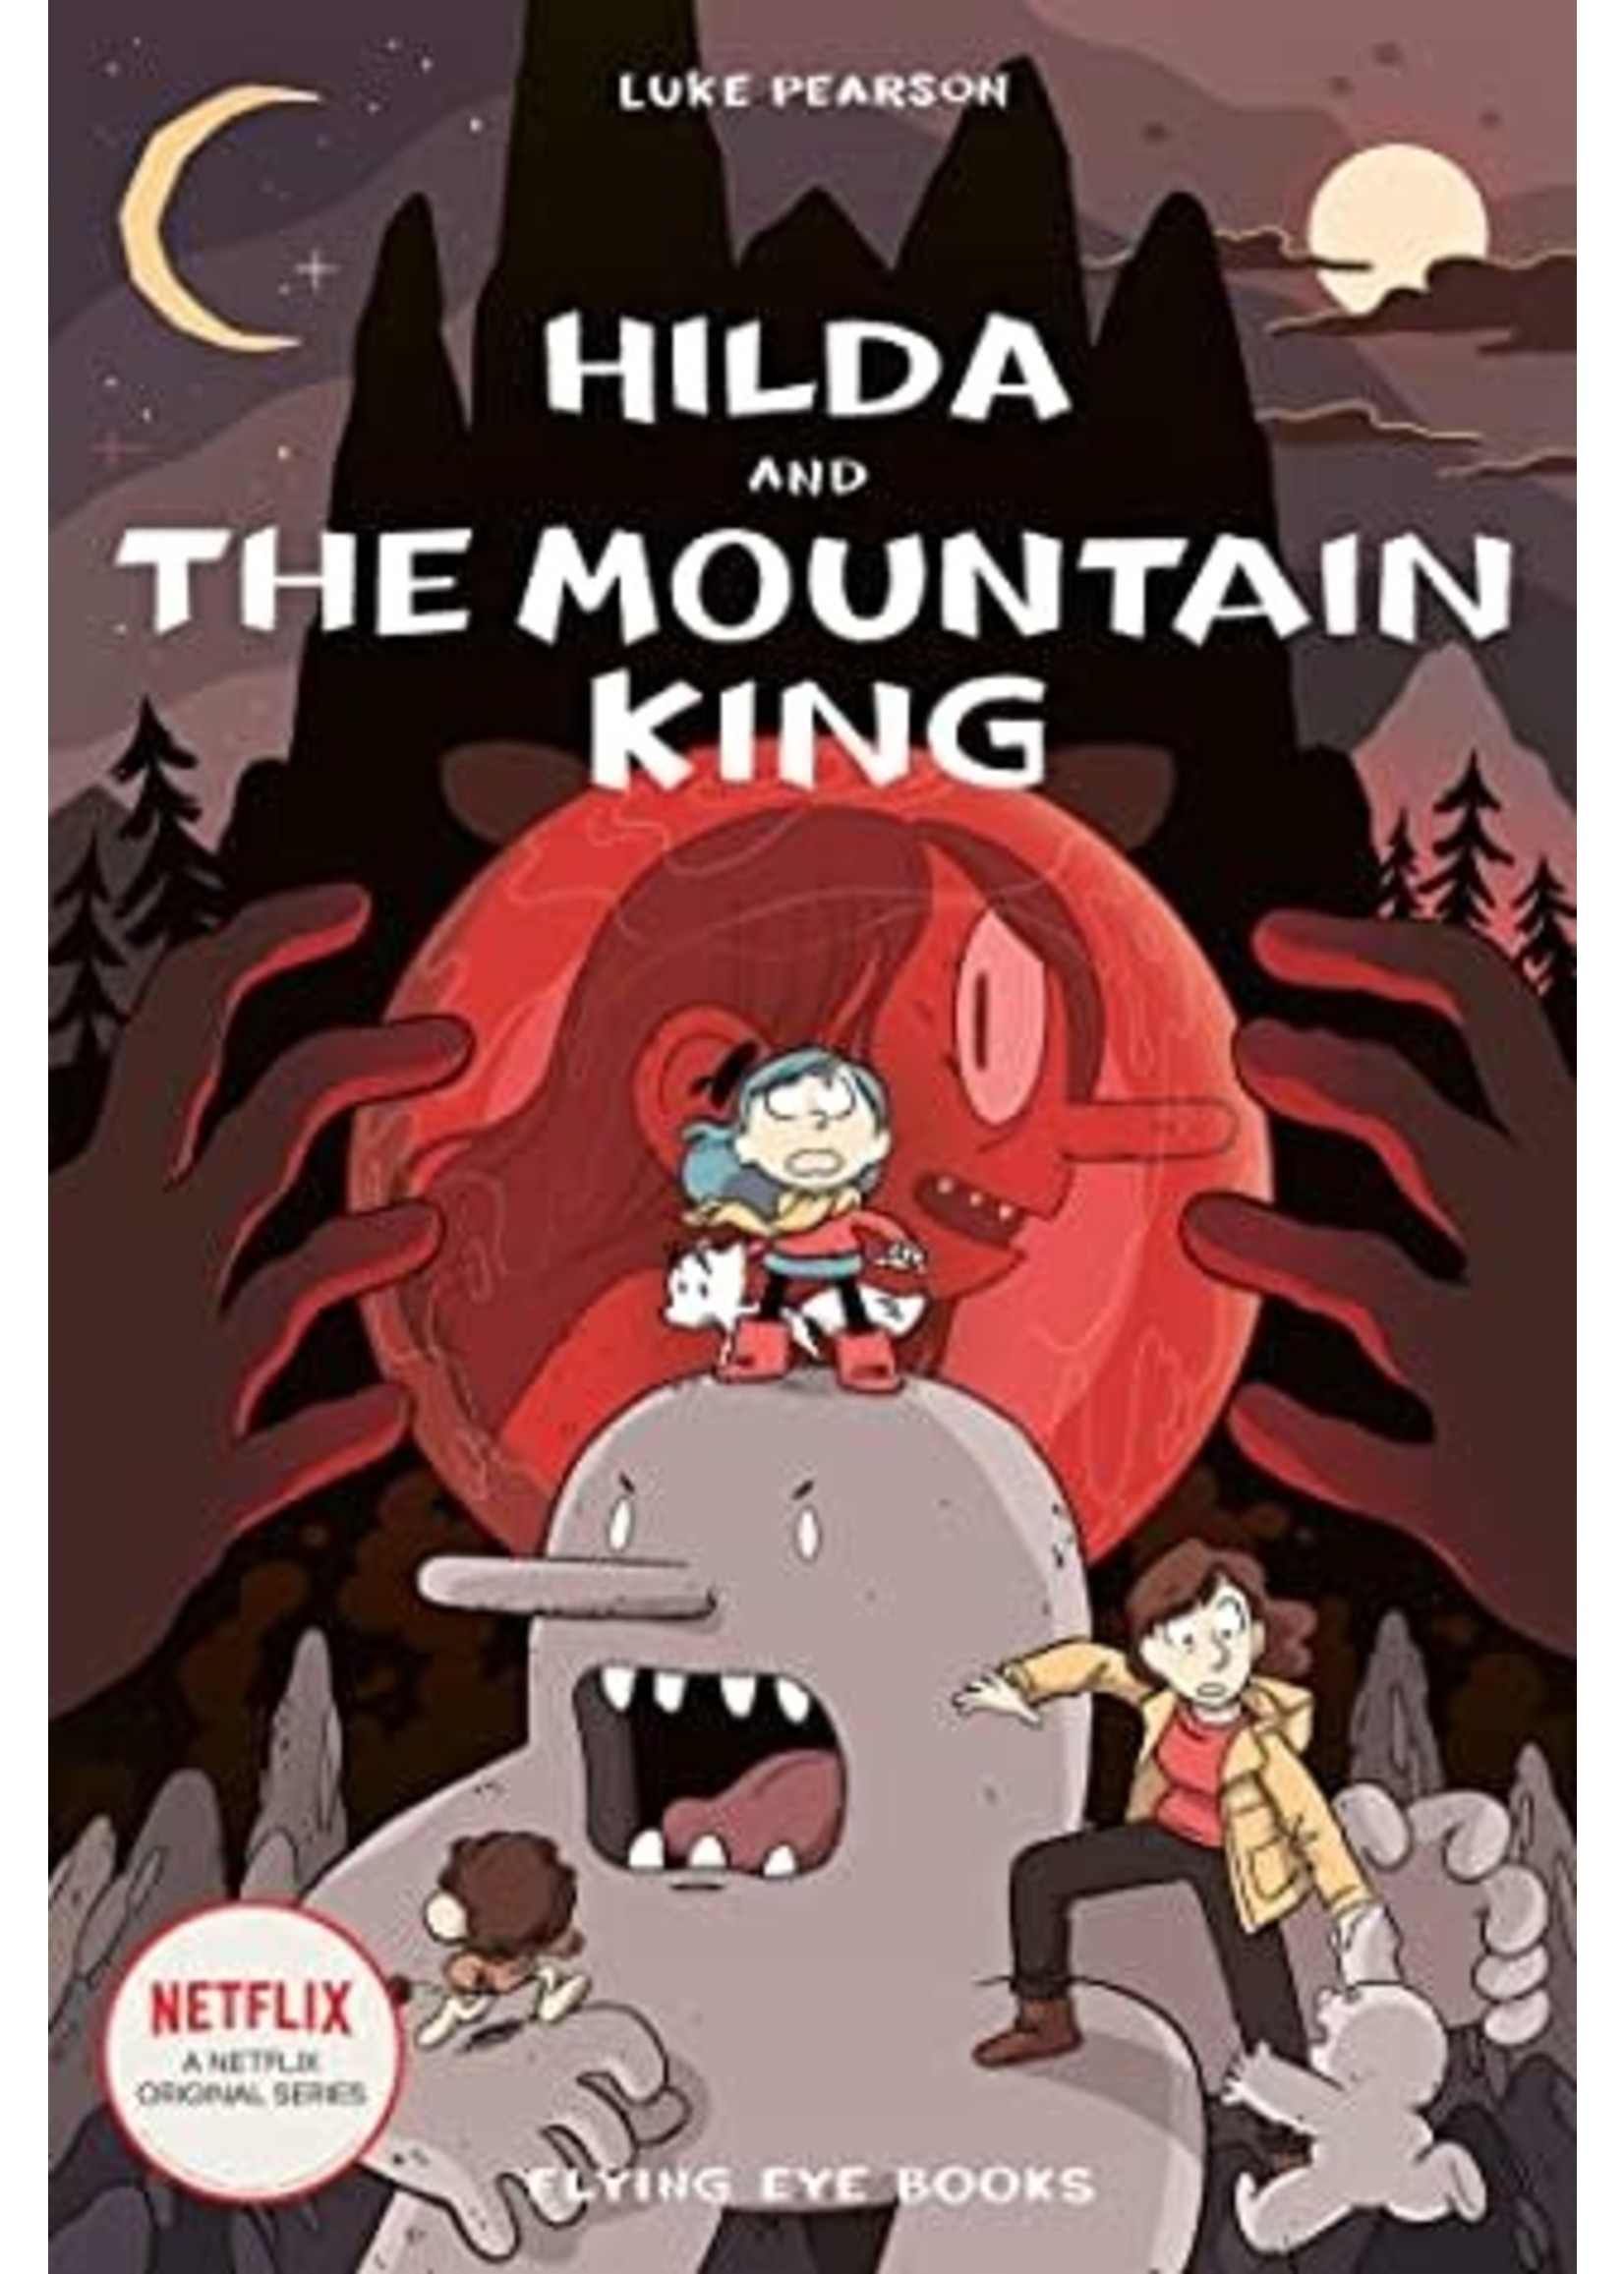 Hilda and the Mountain King (Hilda #6) by Luke Pearson